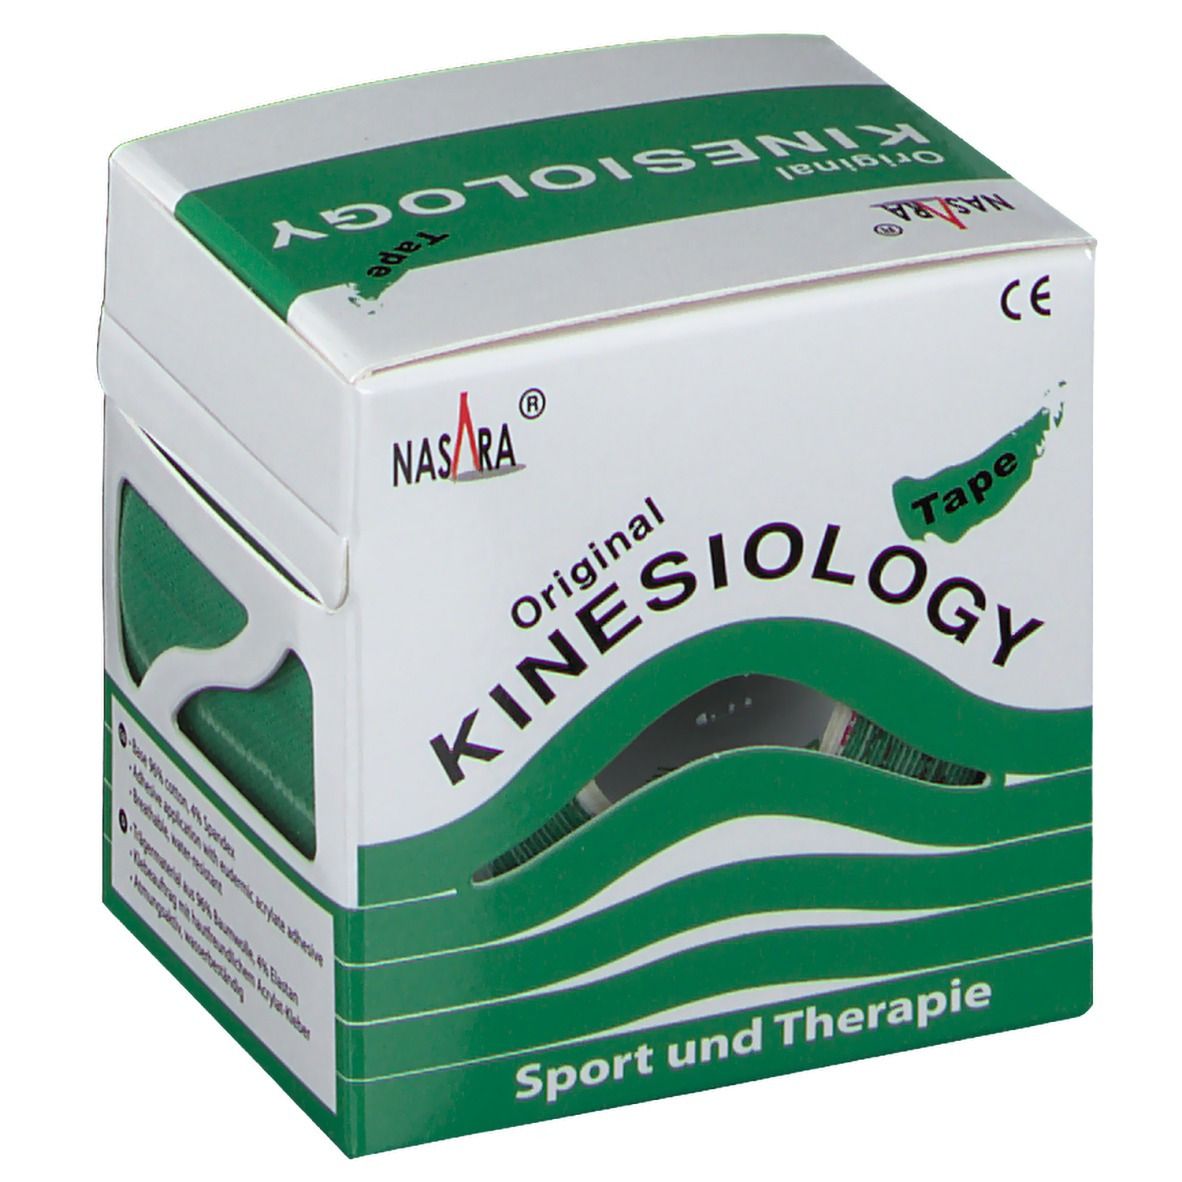 Nasara® Kinesiology-Tape classic 5 cm x 5 m Rolle Grün